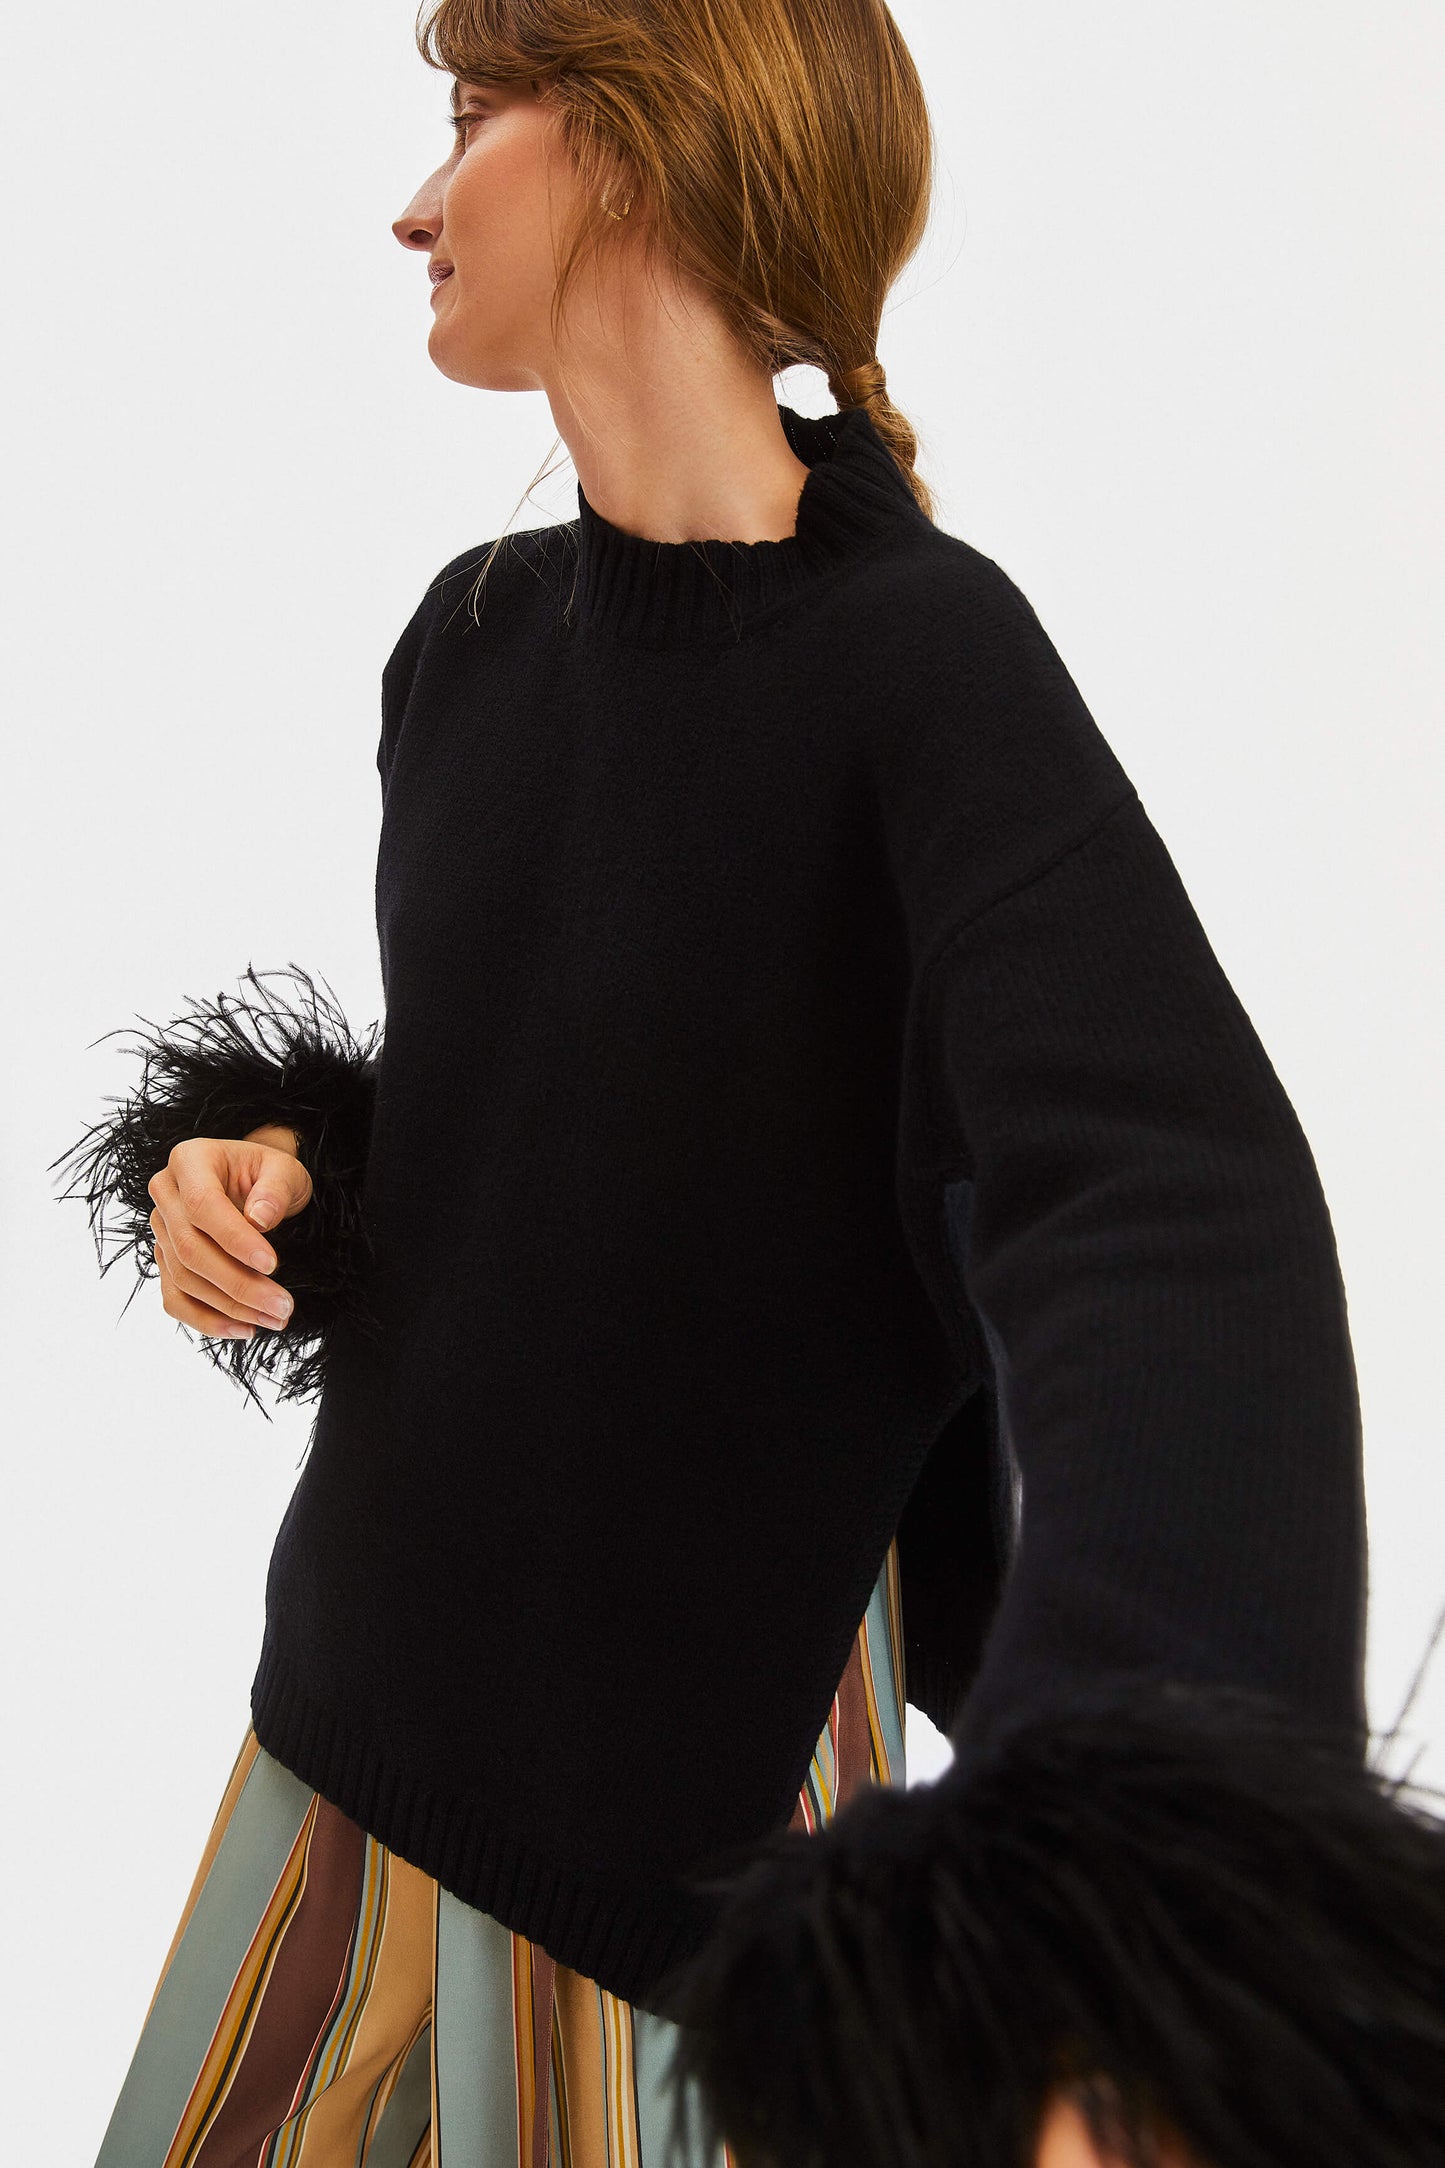 Agatha Wool Sweater in Black